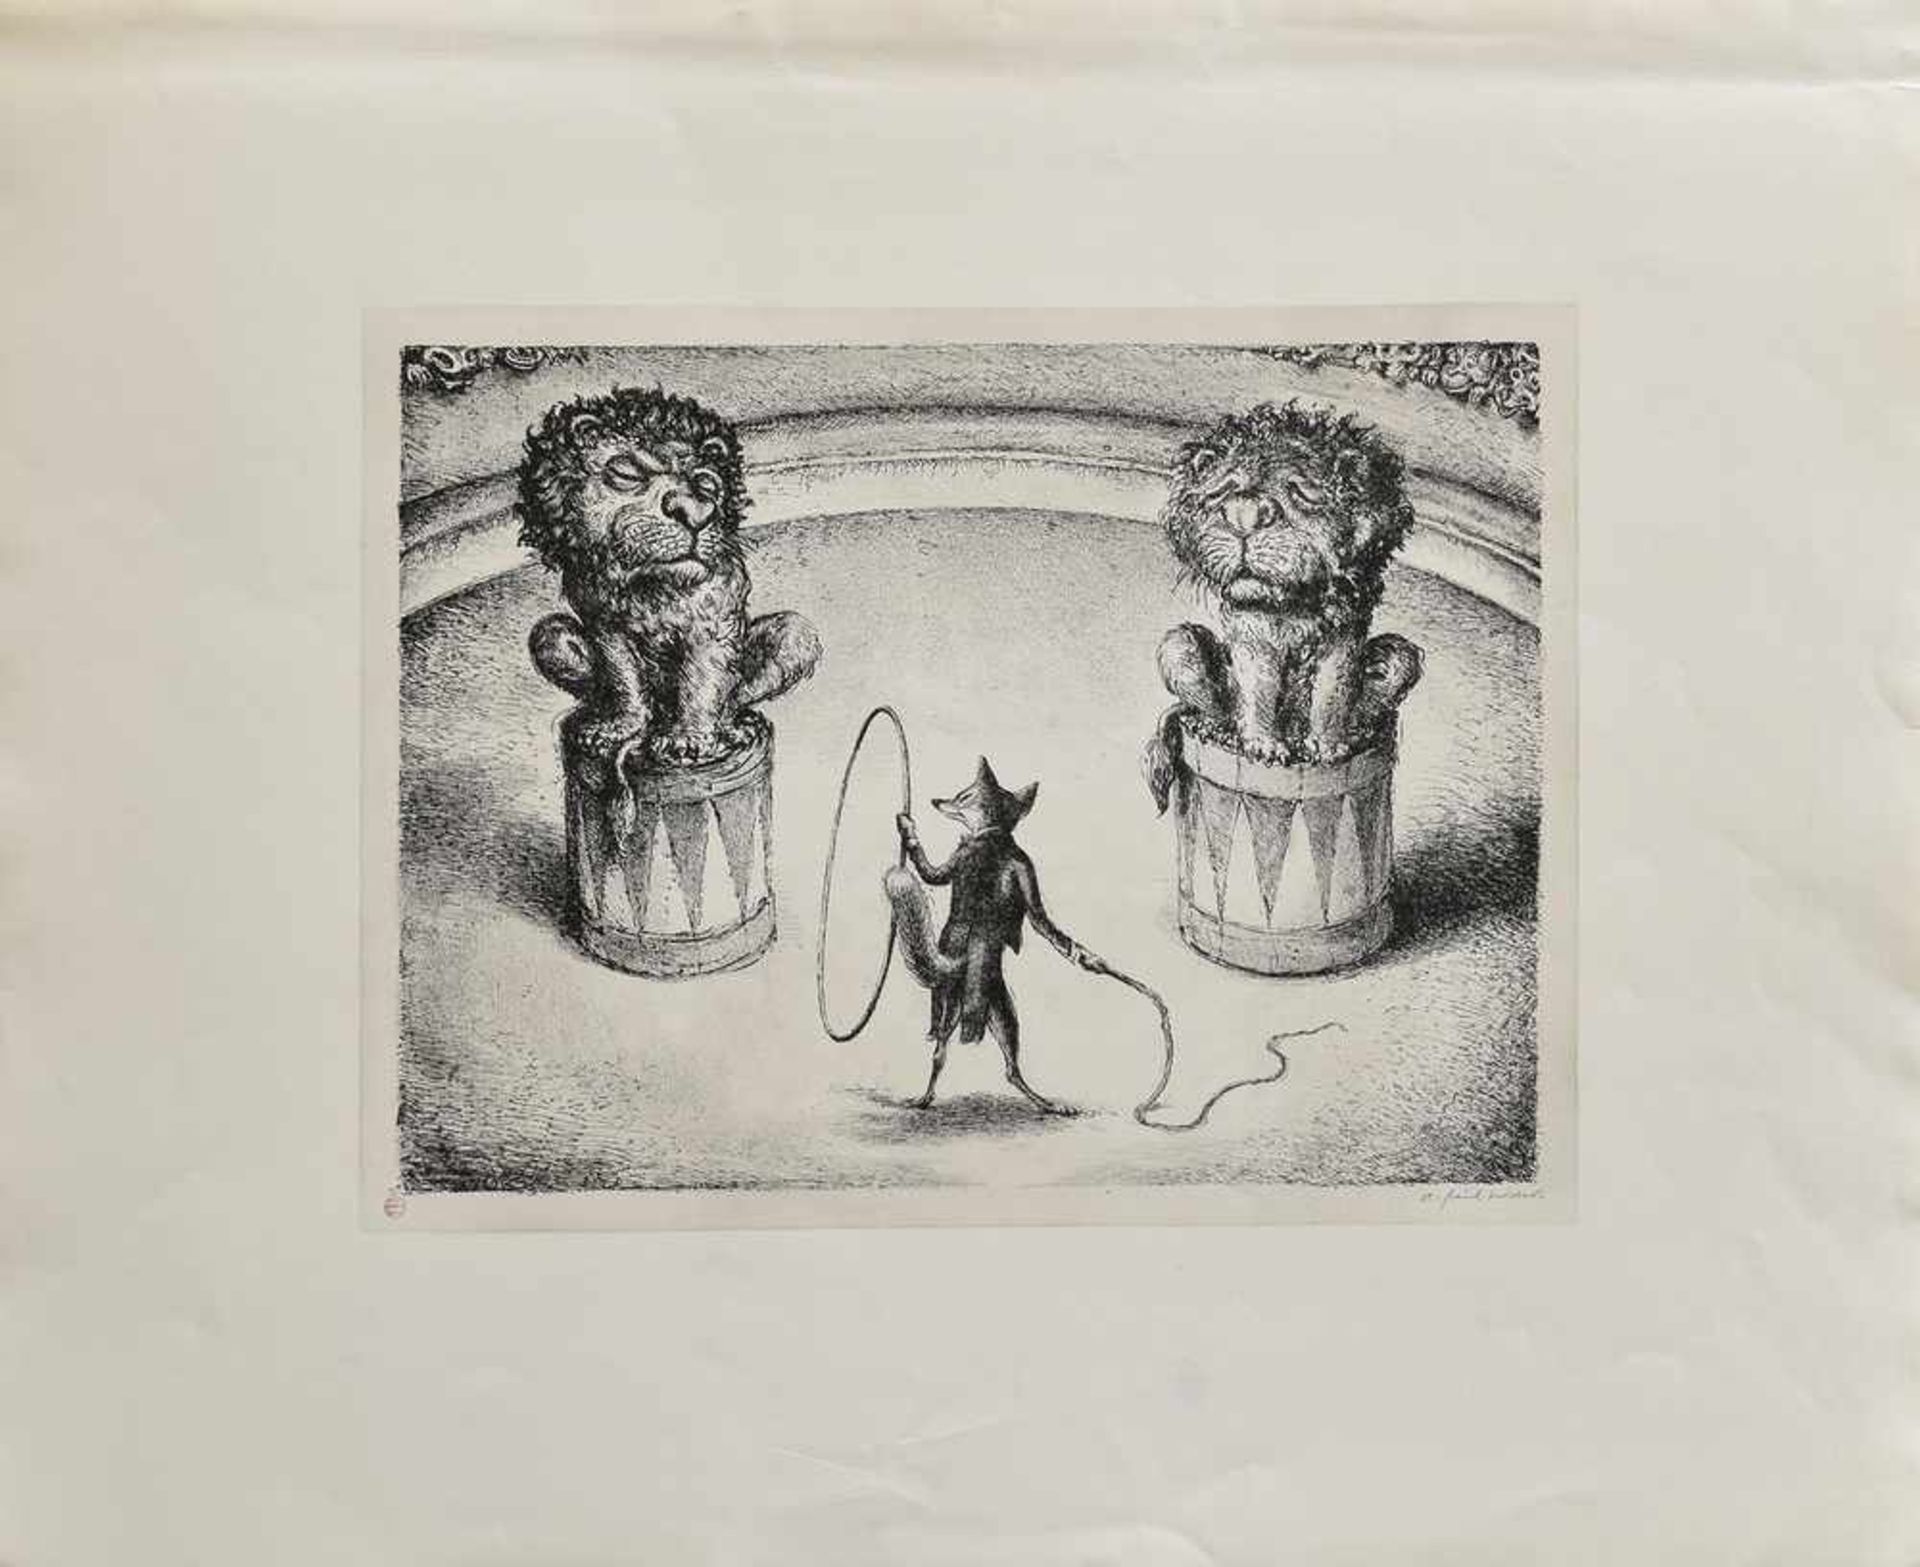 7 Diverse Weber, A. Paul (1893-1980) "Tierdarstellungen", u.r.sign., Griffelkunst, 50x64,5cm 7 - Image 5 of 8